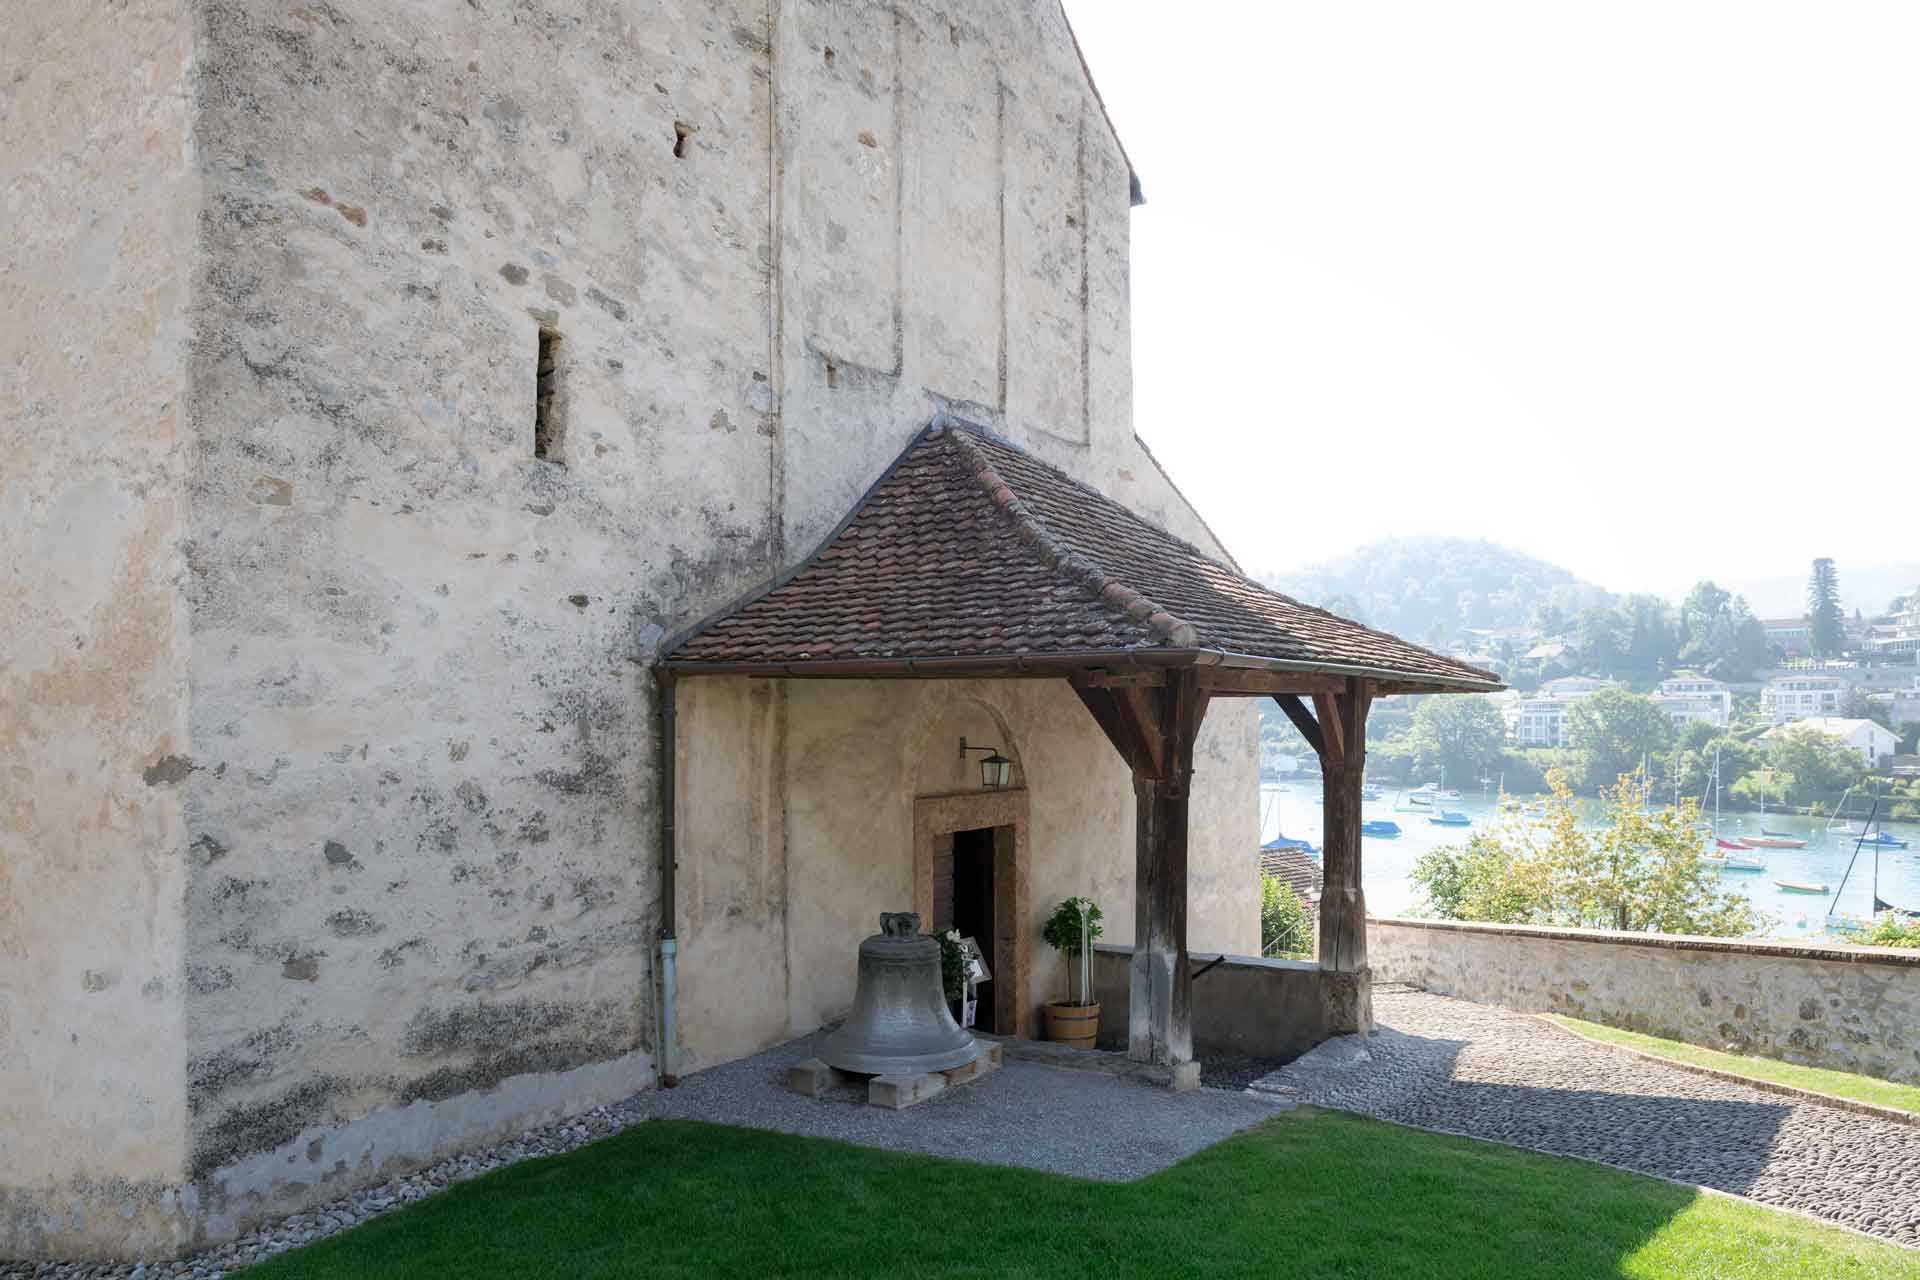 Wedding in Schloss Spiez